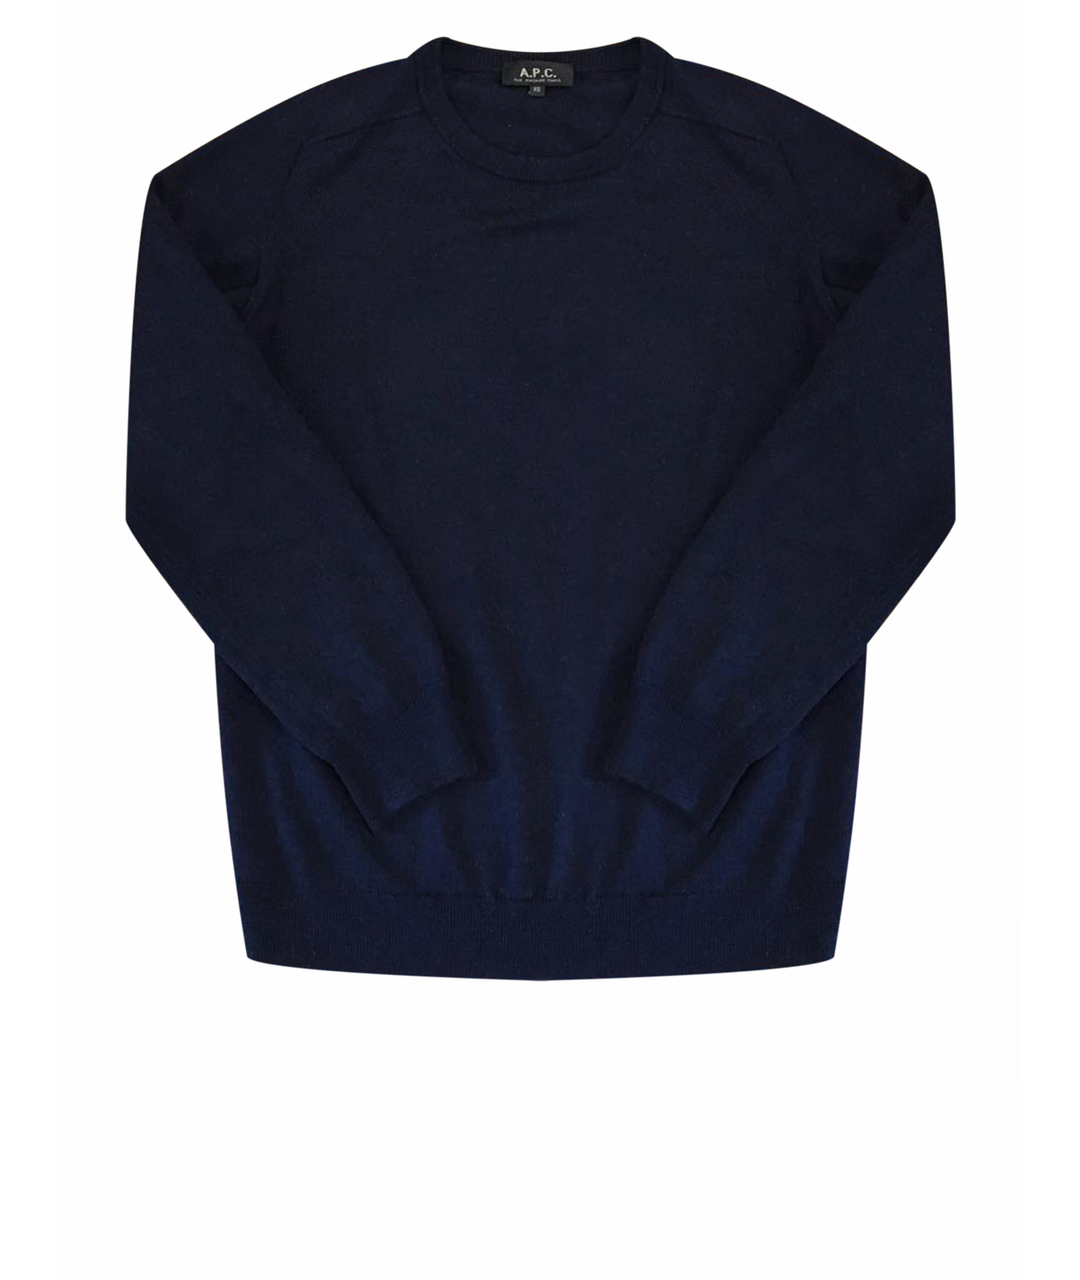 A.P.C. Темно-синий шерстяной джемпер / свитер, фото 1